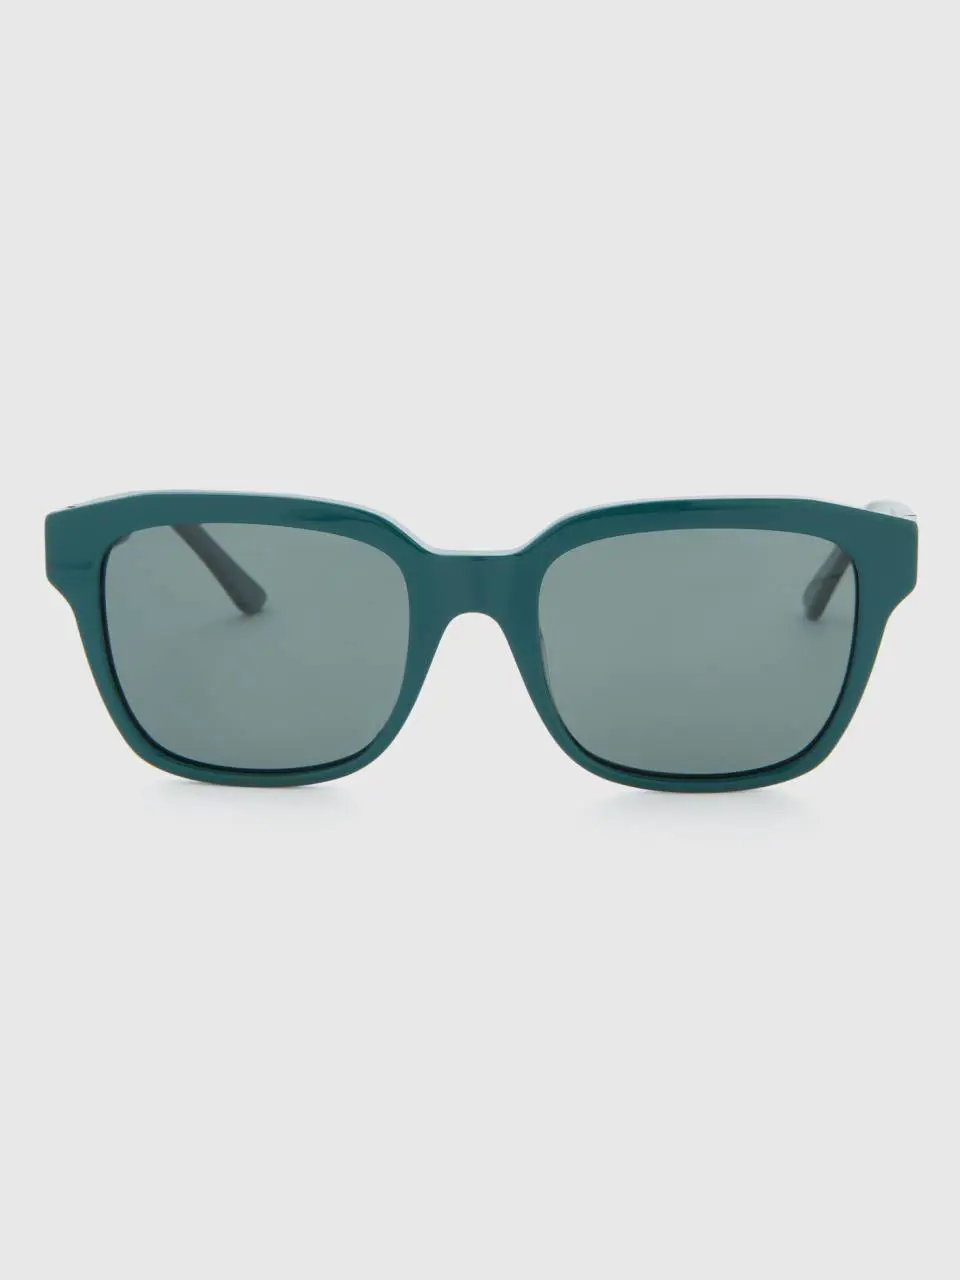 Benetton green sunglasses with logo. 1